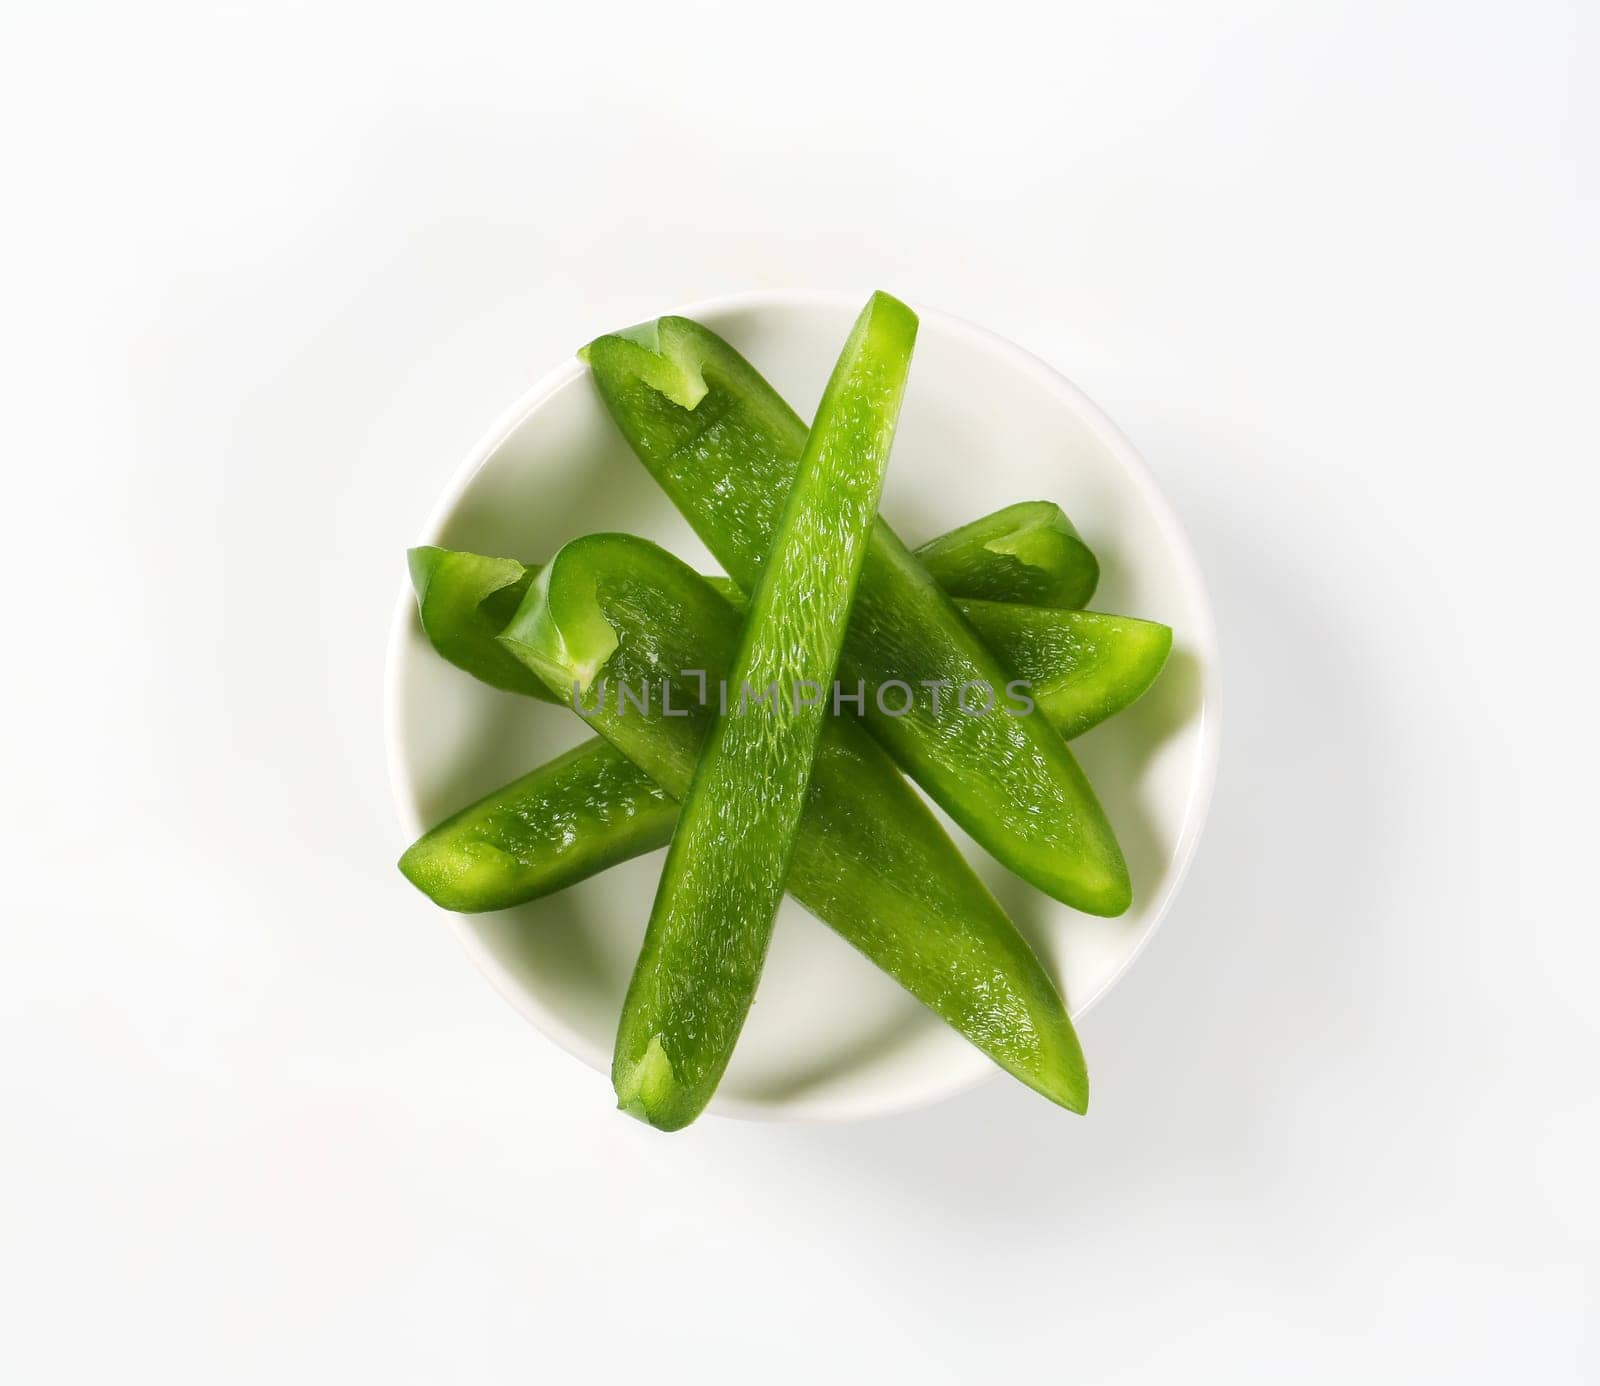 Thin slices of fresh green pepper in white bowl